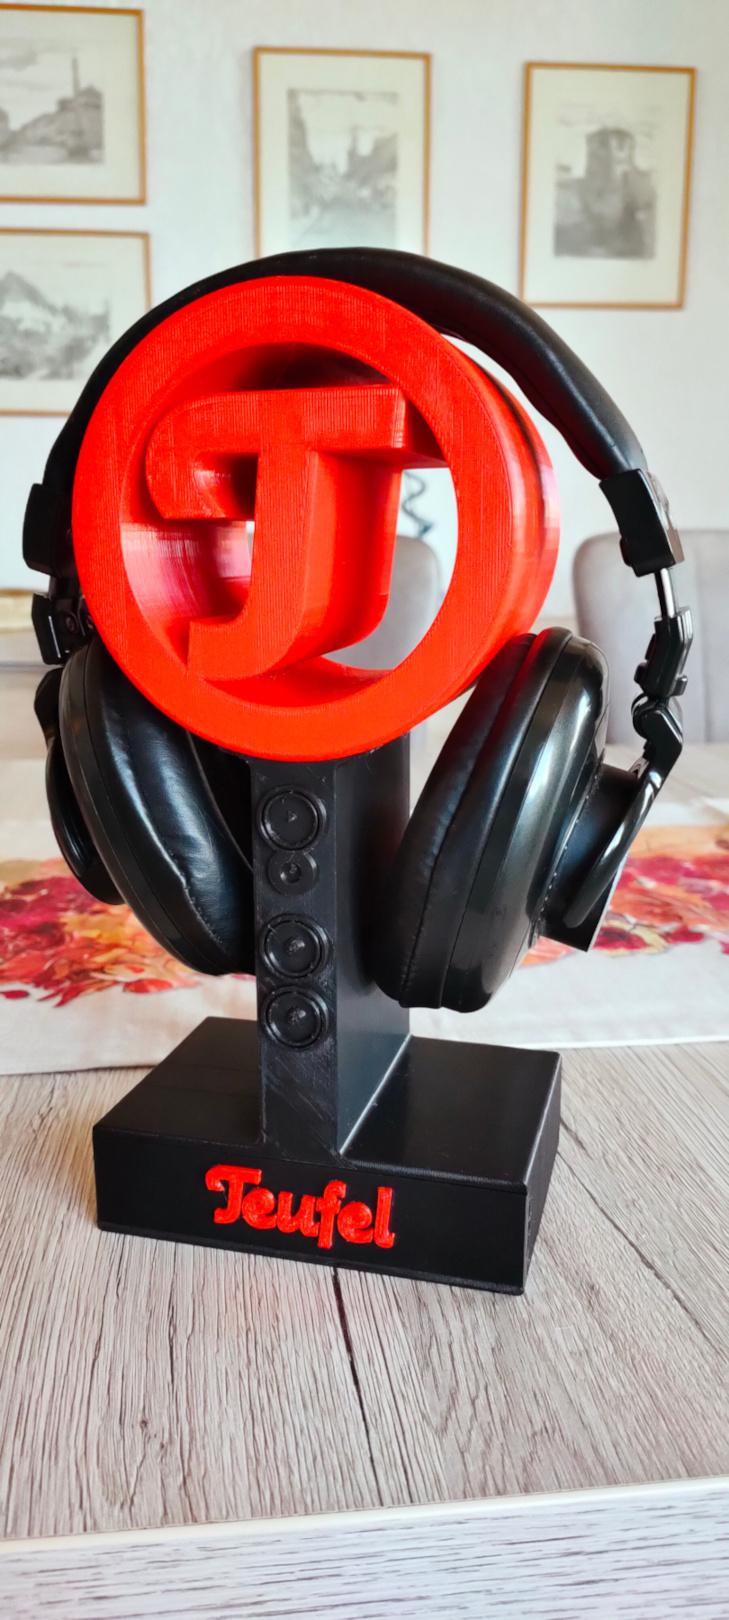 Teufel audio headphone stand holder Kopfhörer Halter Halterung 3d model